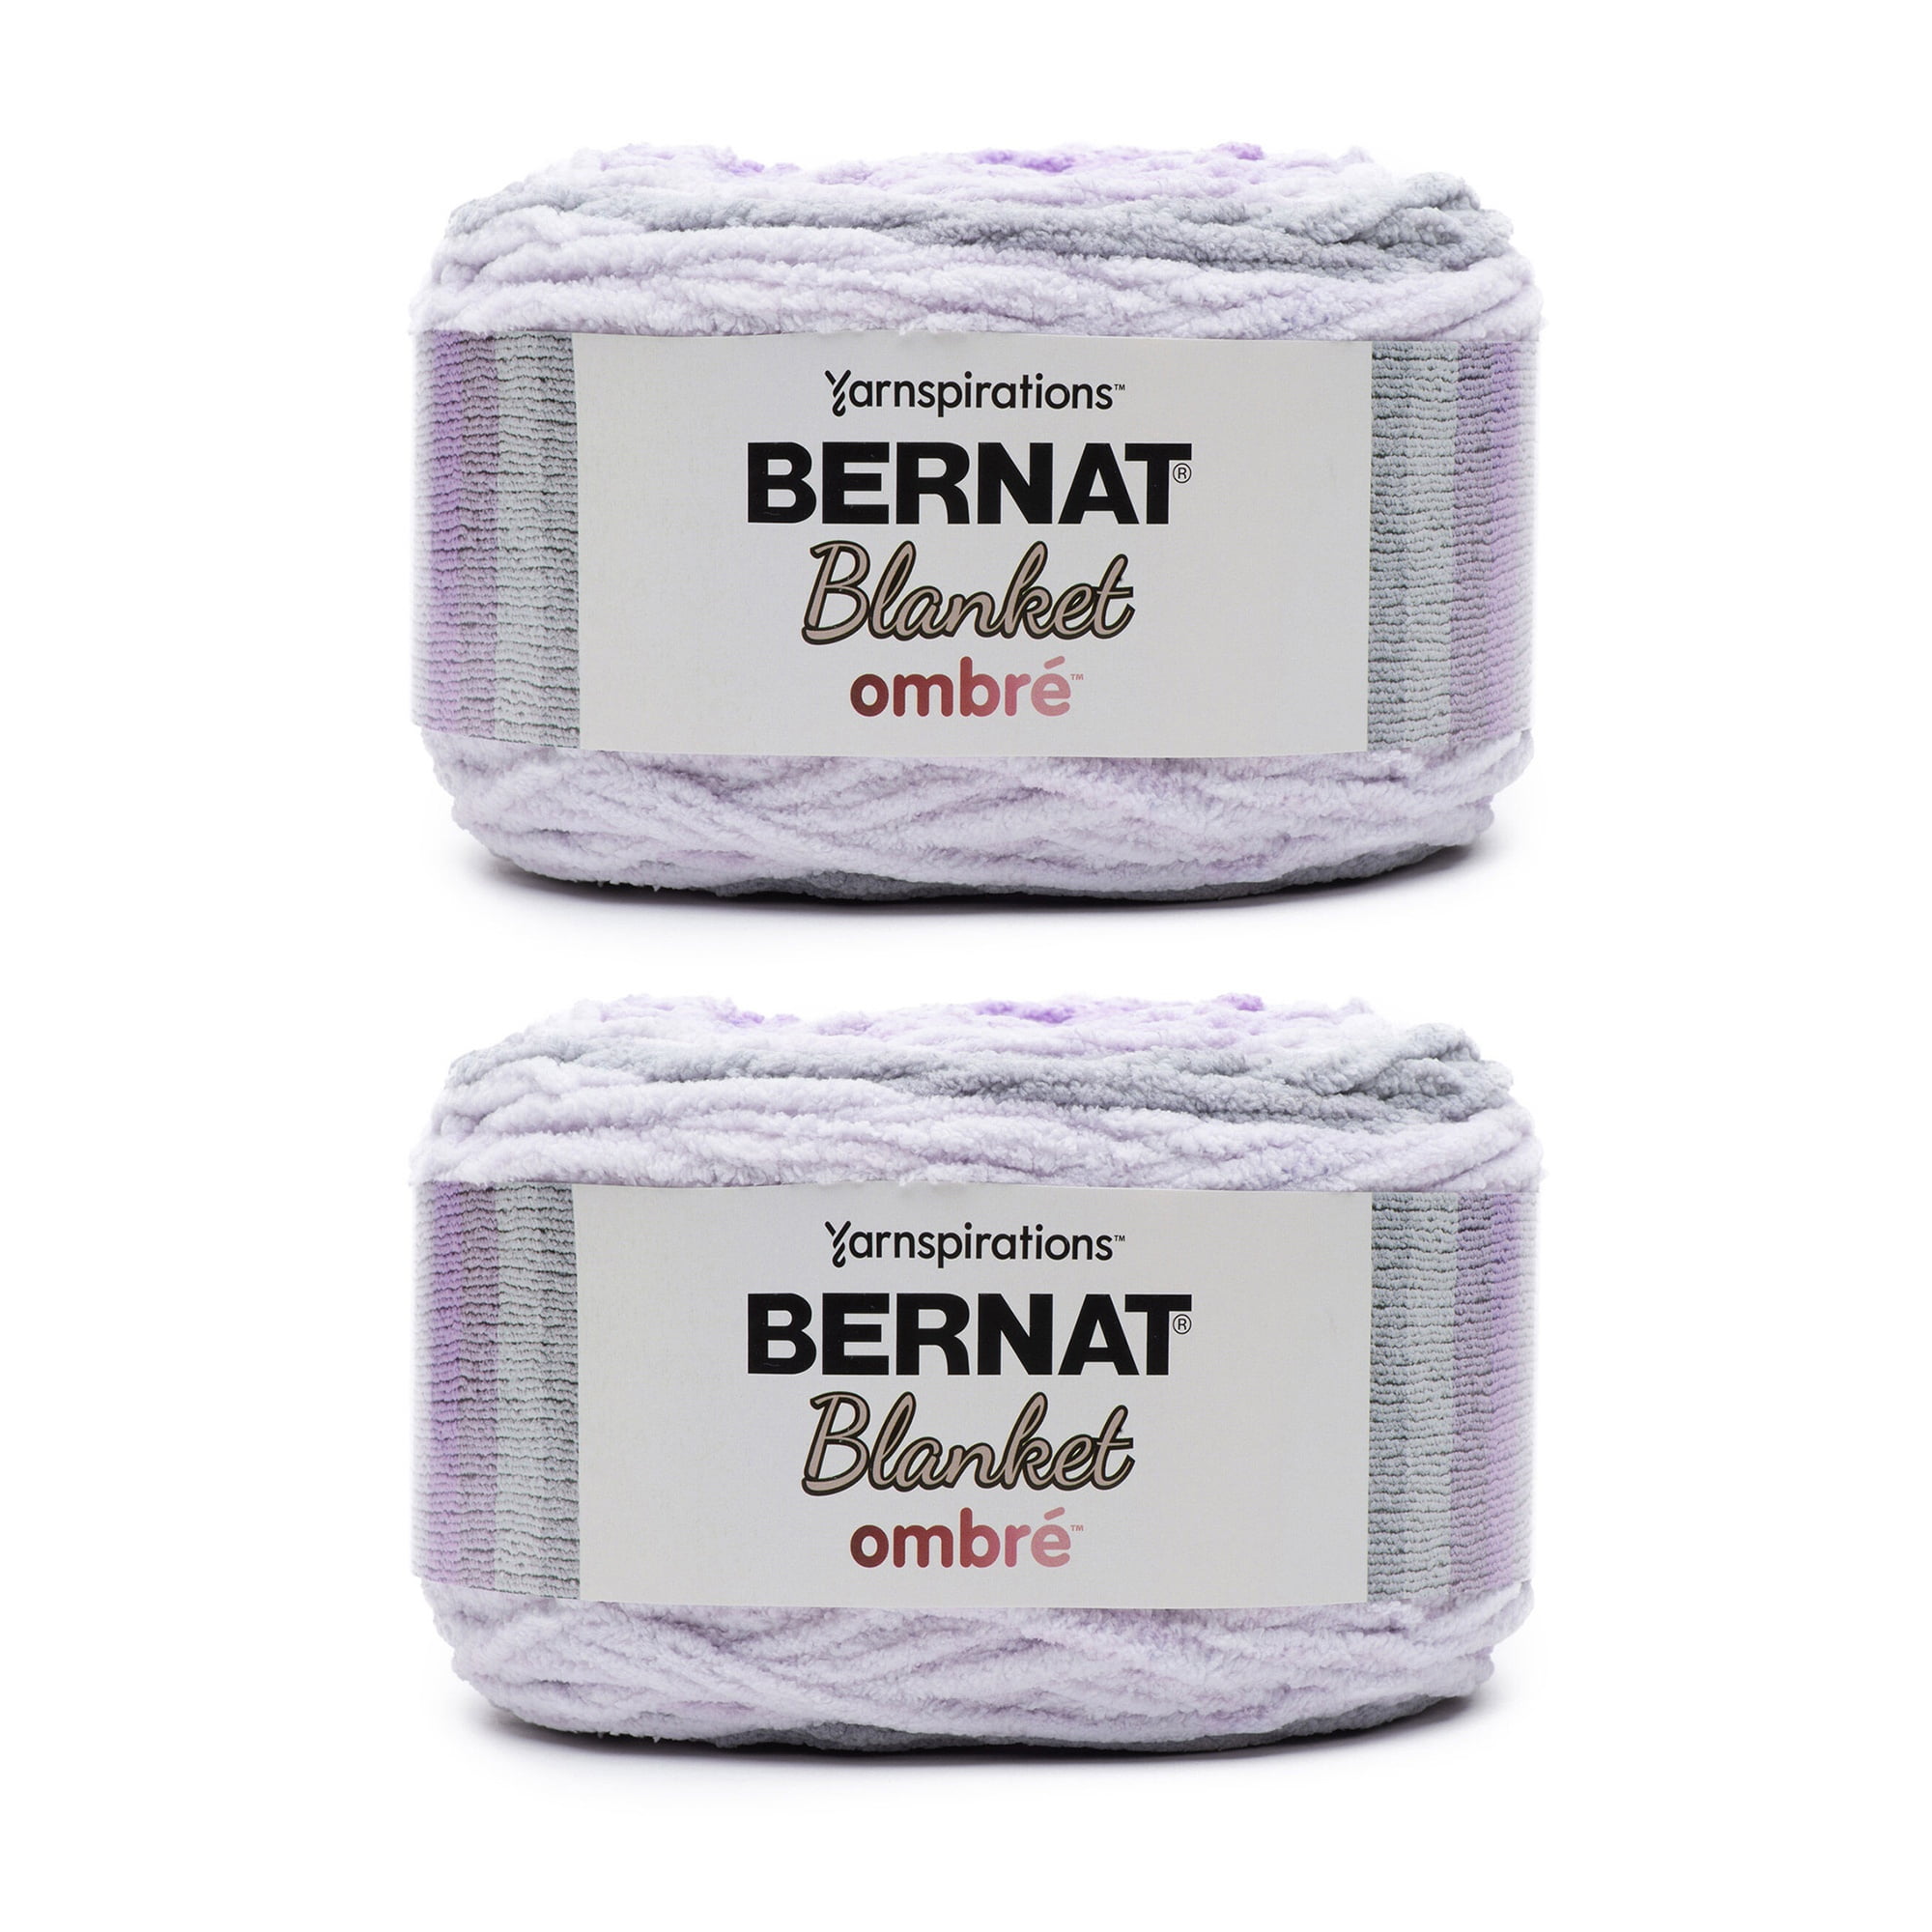 Bernat Blanket Ombre Cool Purple Ombre Yarn - 2 Pack of 300g/10.5oz -  Polyester - 6 Super Bulky - 220 Yards - Knitting/Crochet